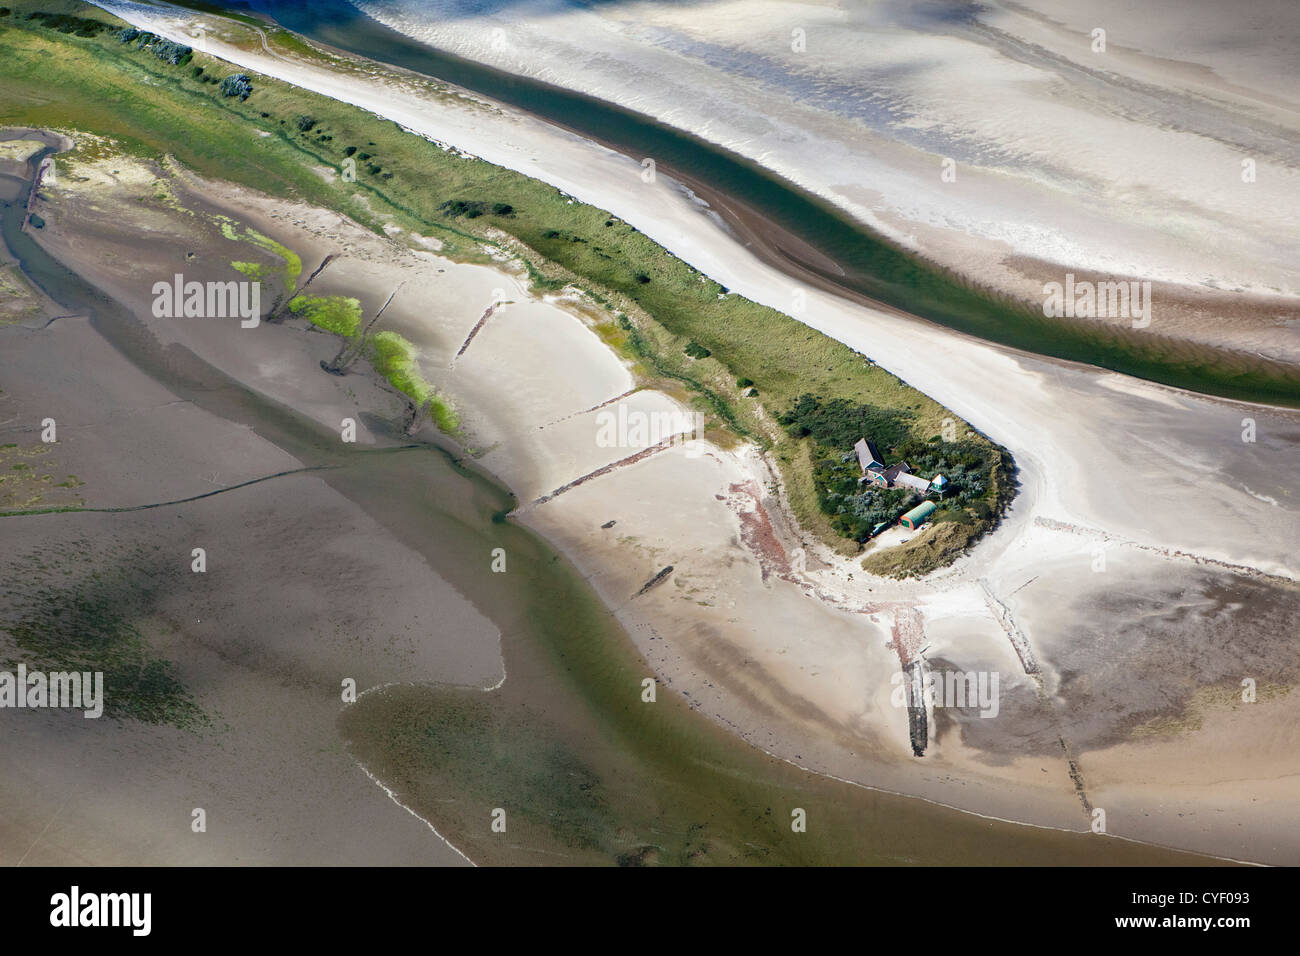 Island called Rottumerplaat. Part of the Wadden Sea islands. UNESCO World Heritage Site. Marsh land, mud flats. Aerial. Stock Photo